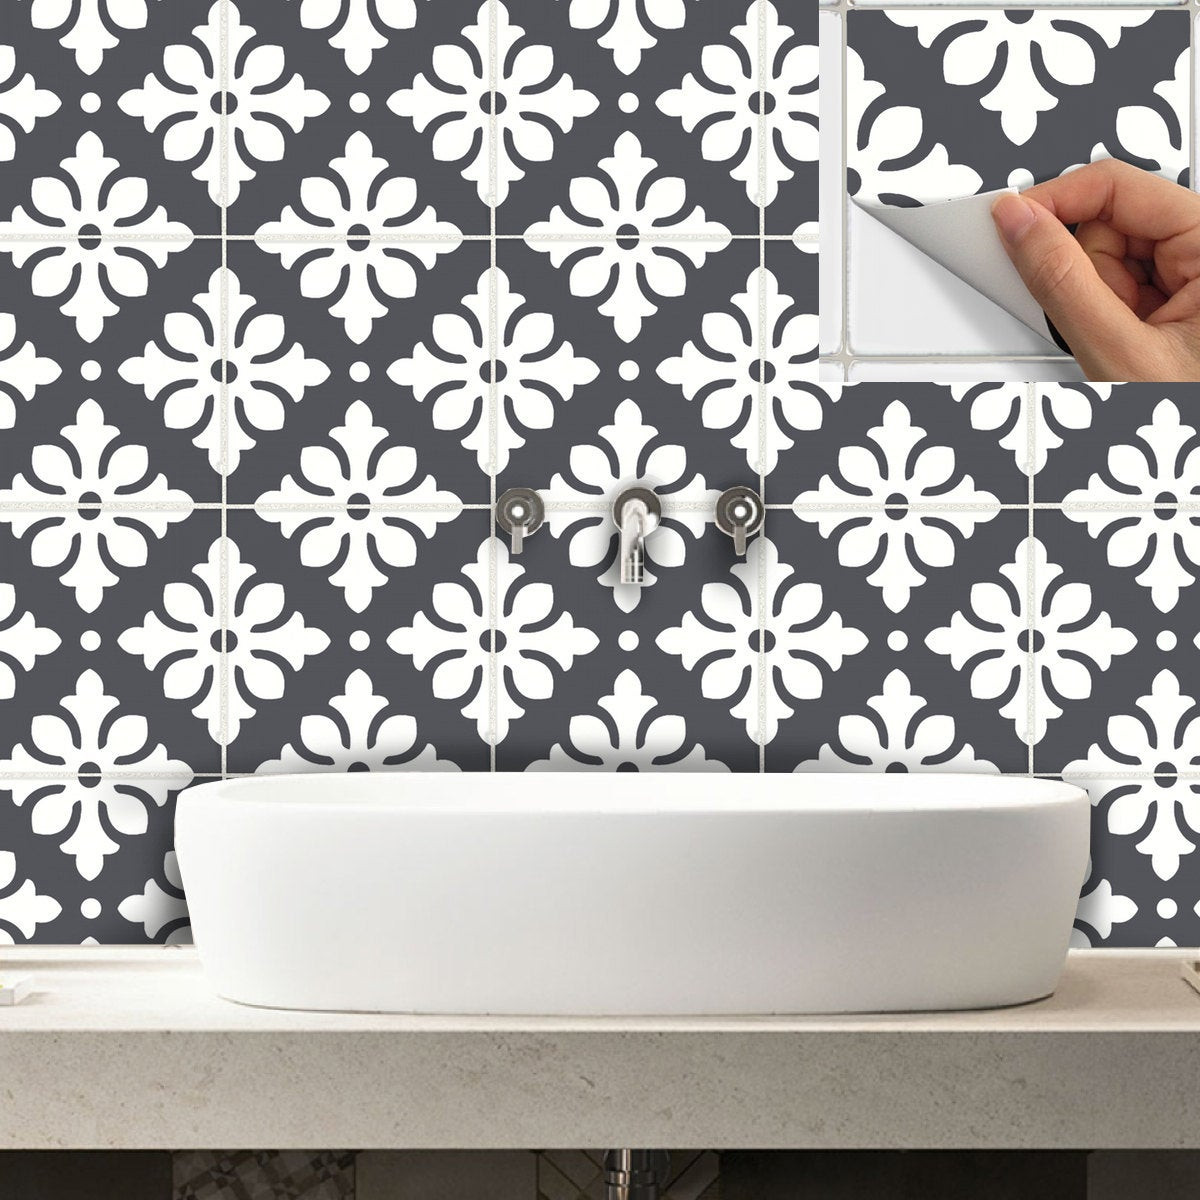 Tile Decals For Kitchen
 Tile Stickers Decal for Kitchen Bathroom Back splash or